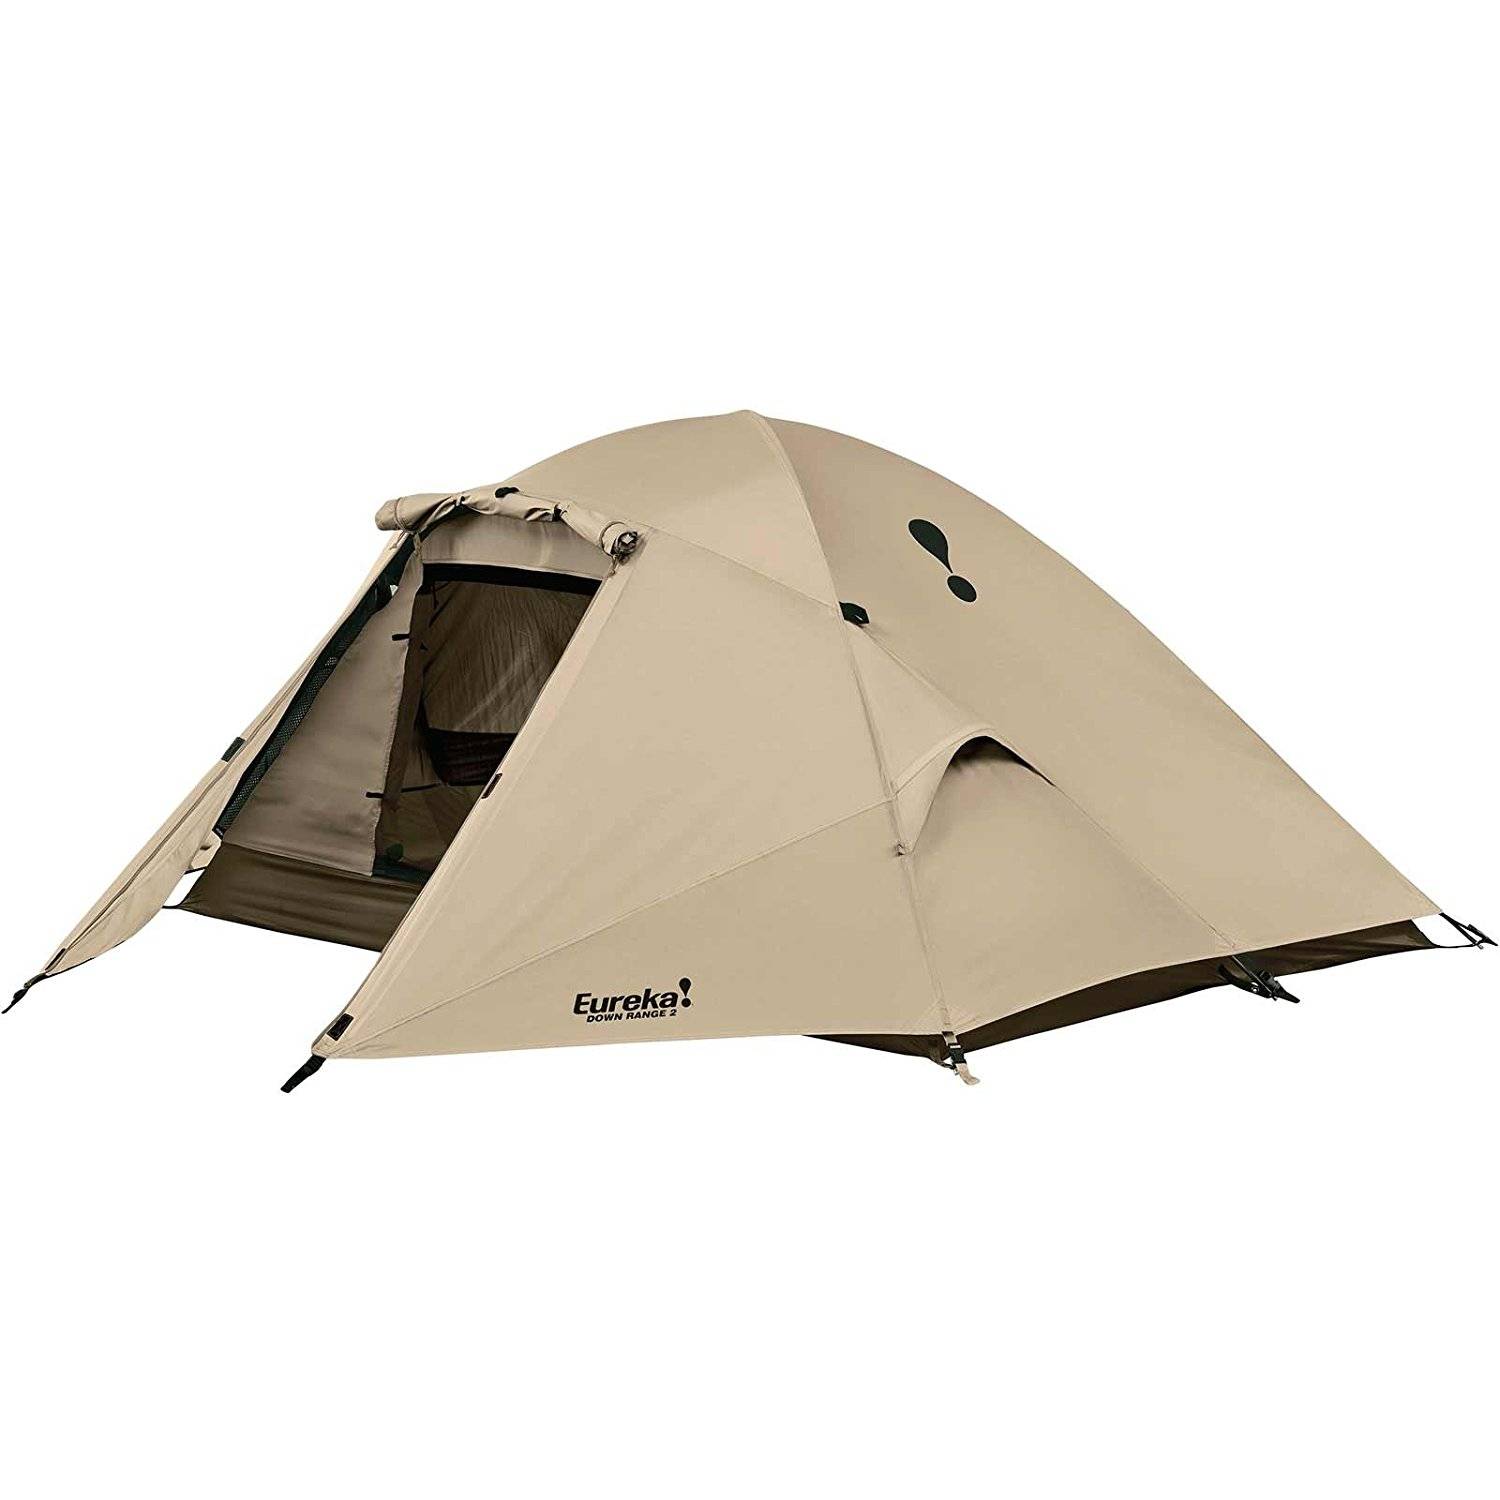 Eureka! Down Range 2 Person Camping Tent